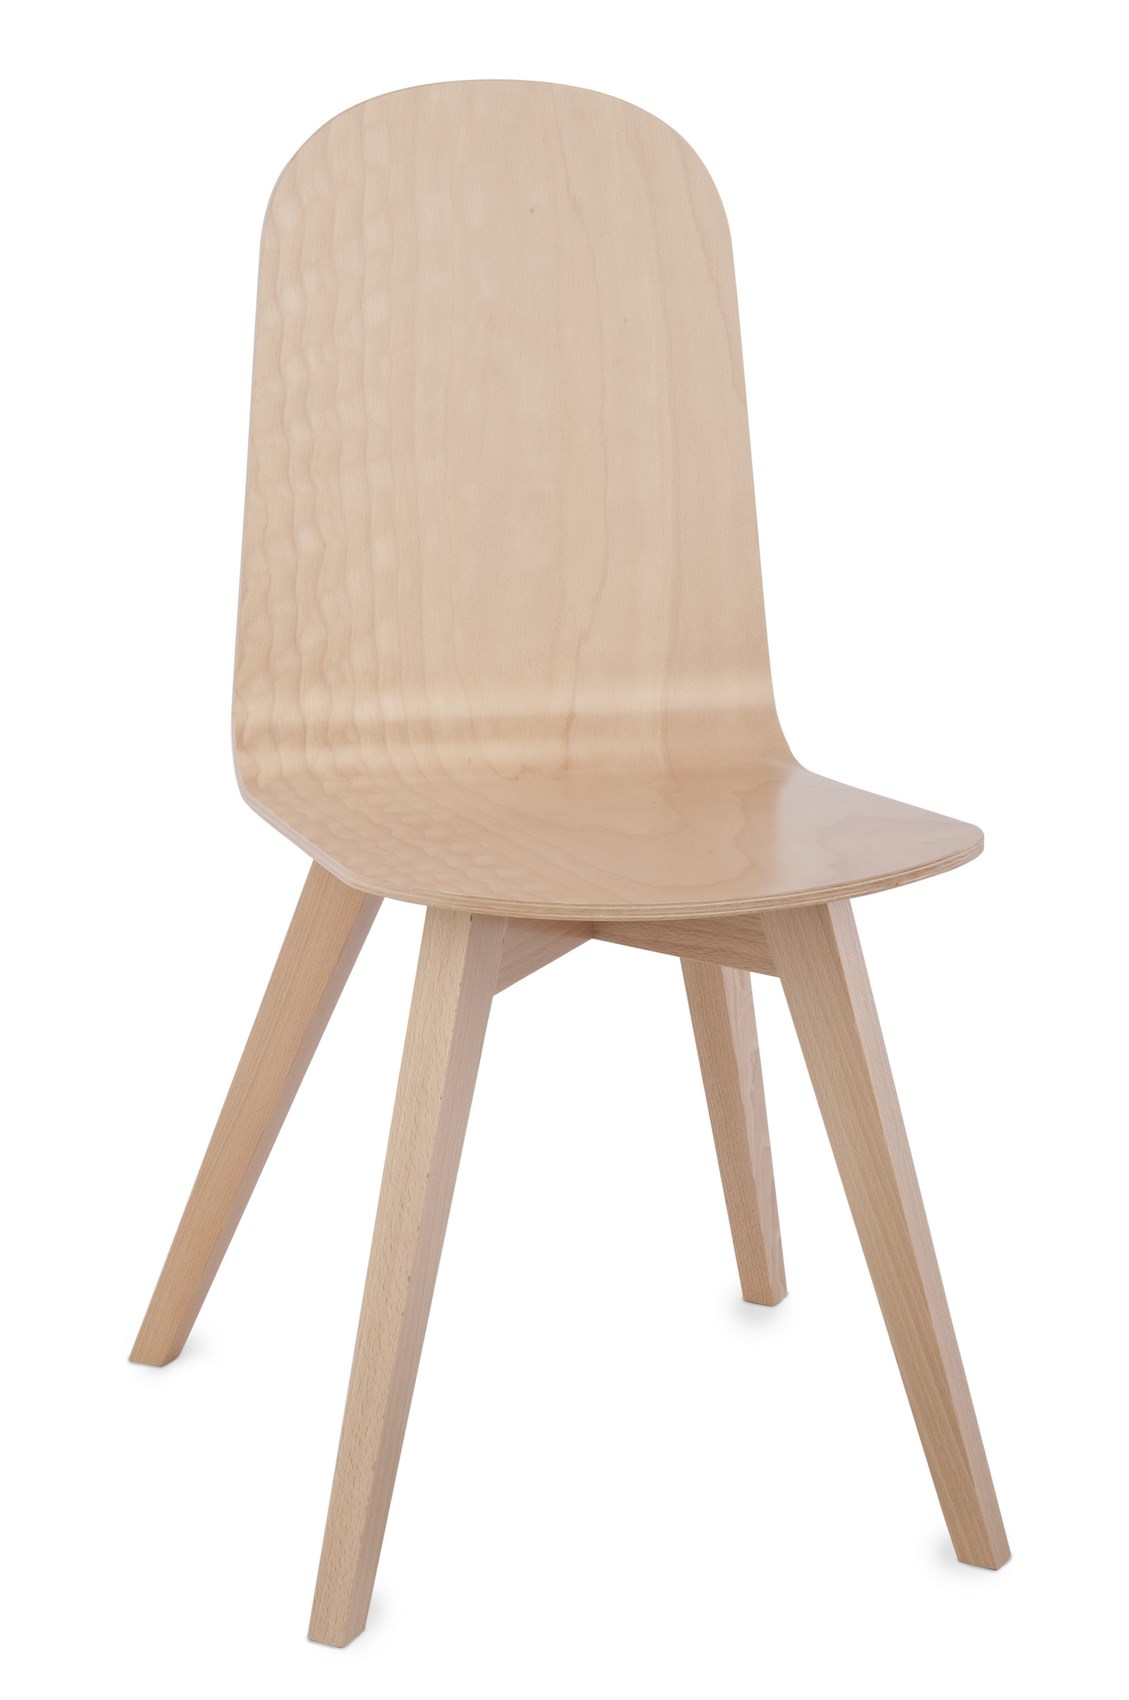 Snap Malmo wood židle bukové dřevo